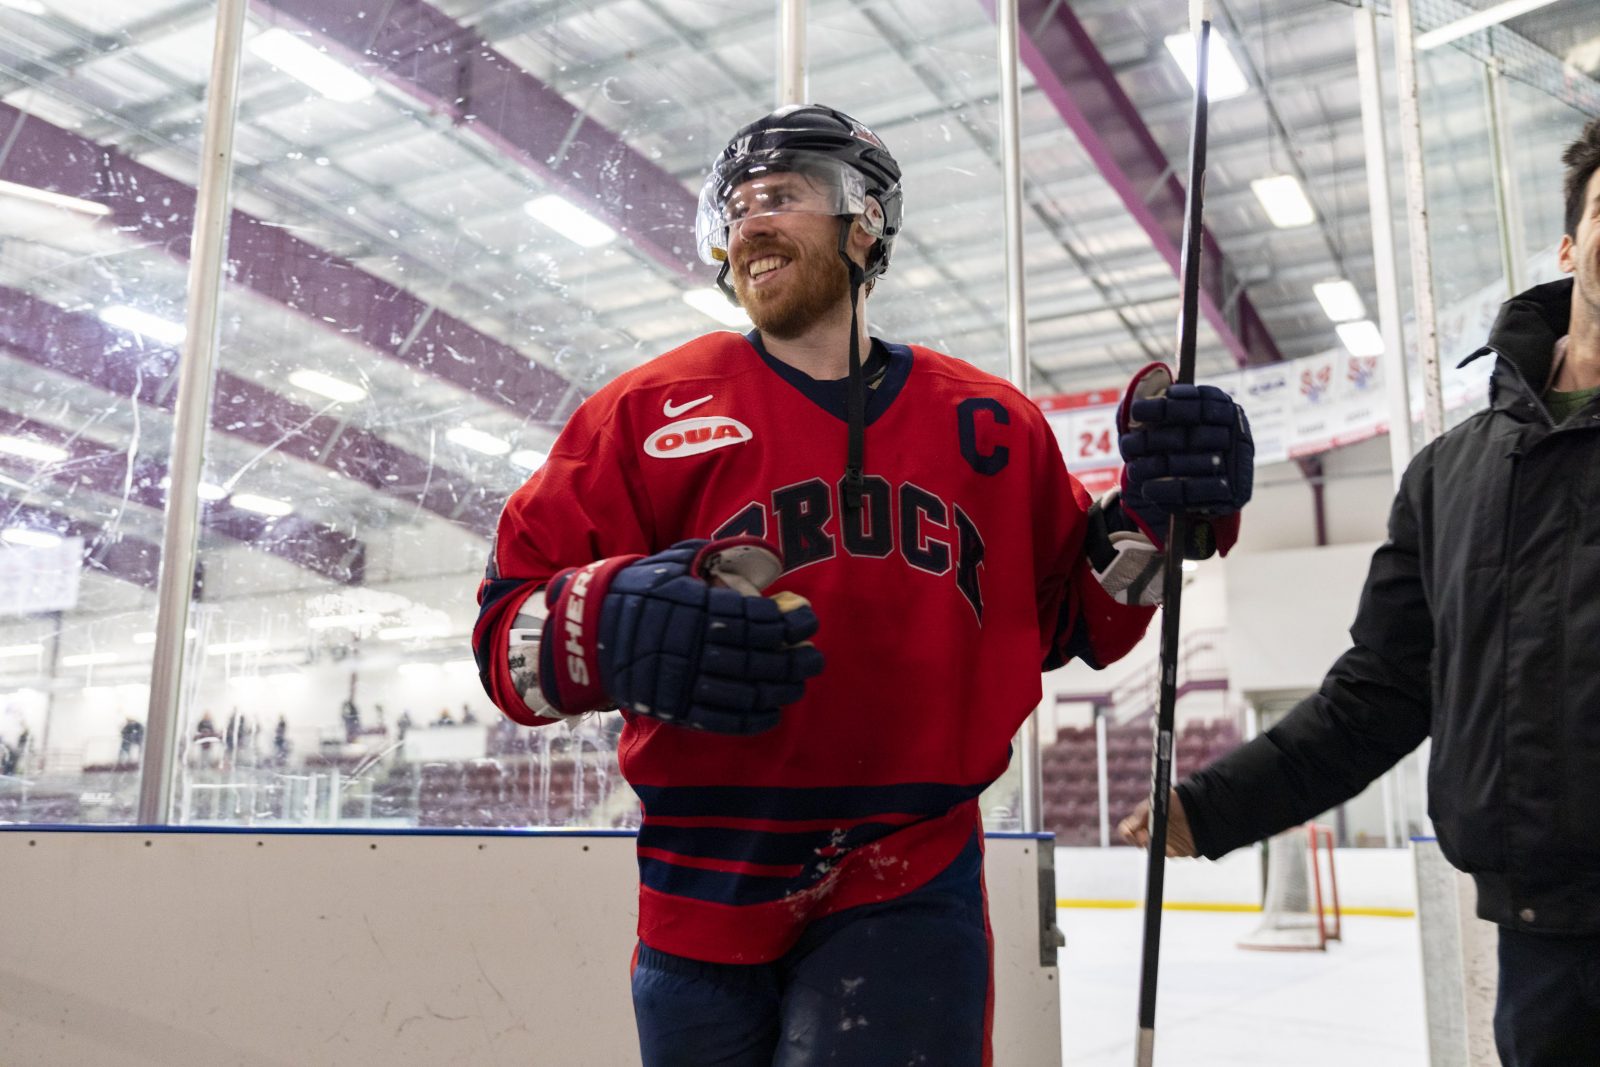 Badgers mens hockey captain snags pro hockey contract with Toledo Walleye 